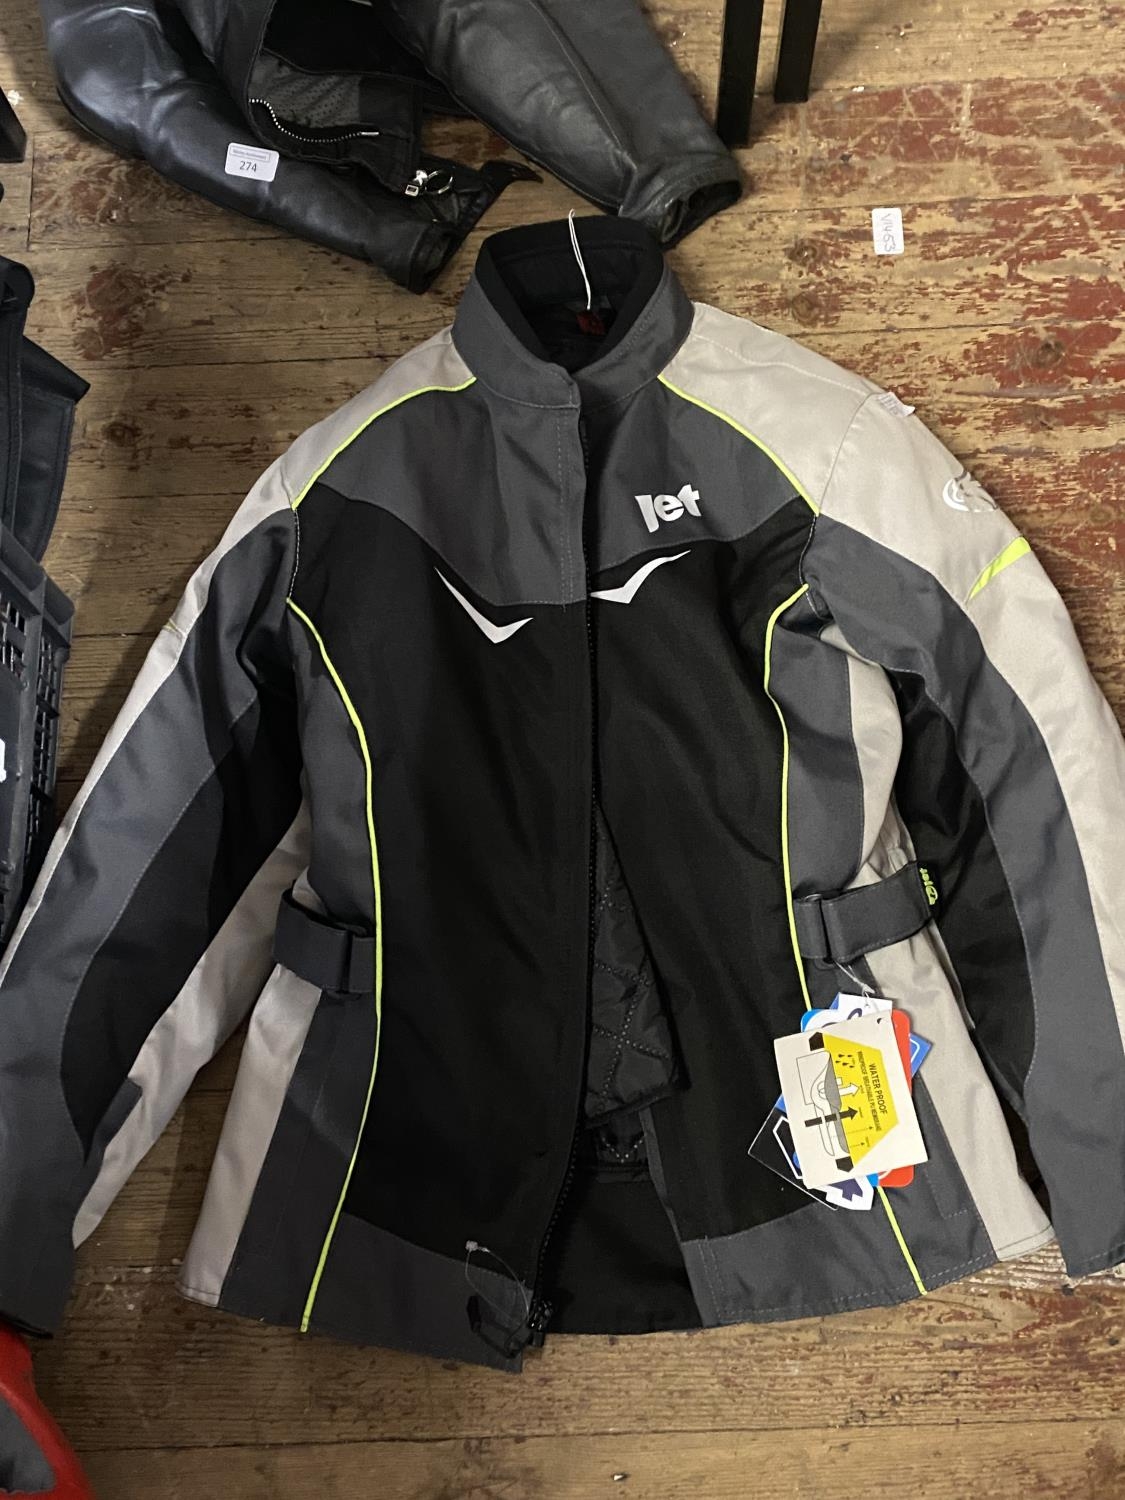 A Jet motorbike jacket size XL new with tags